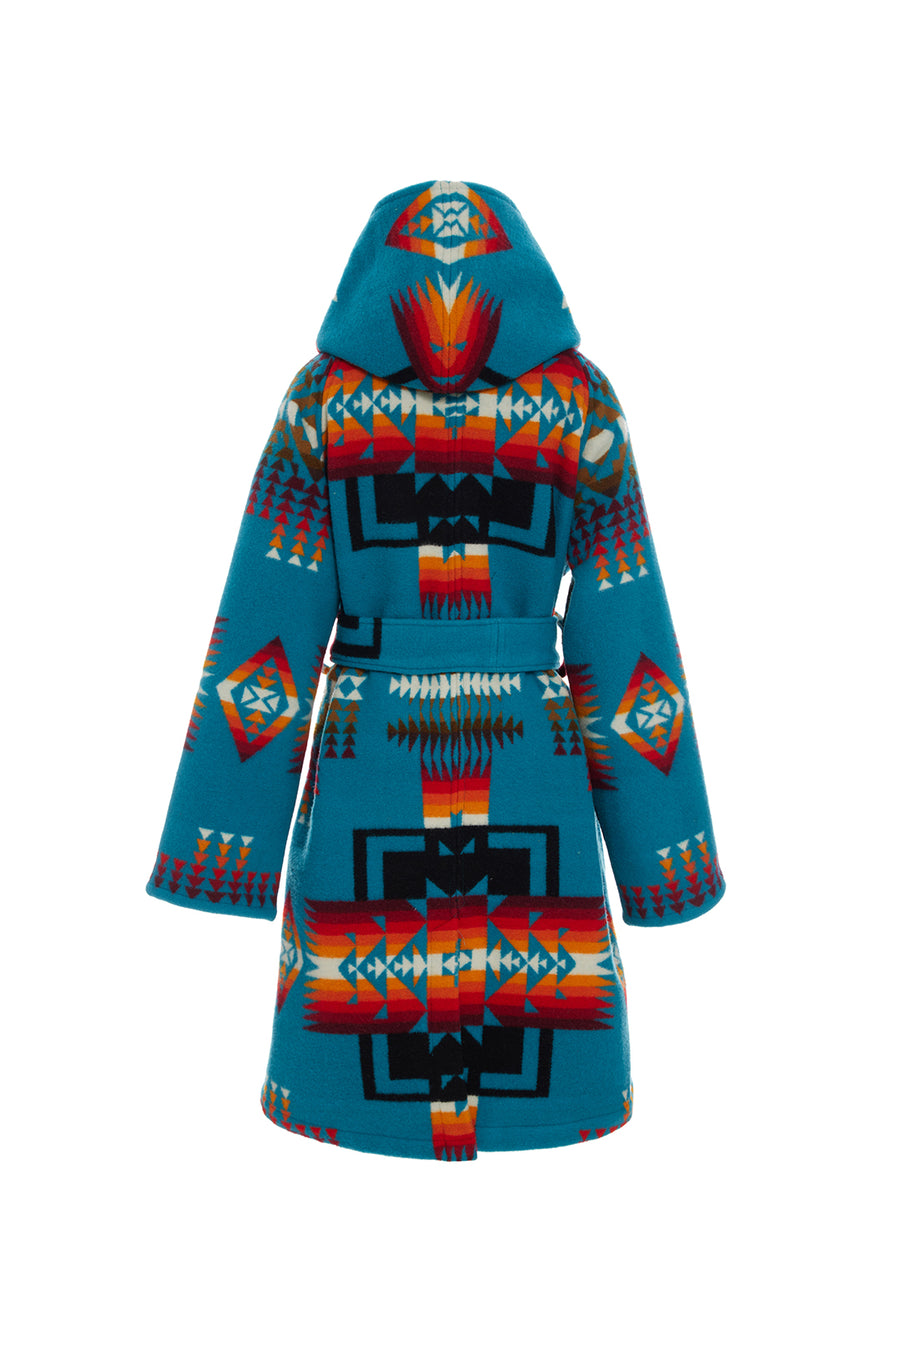 Chief Joseph Turquoise Classic Robe